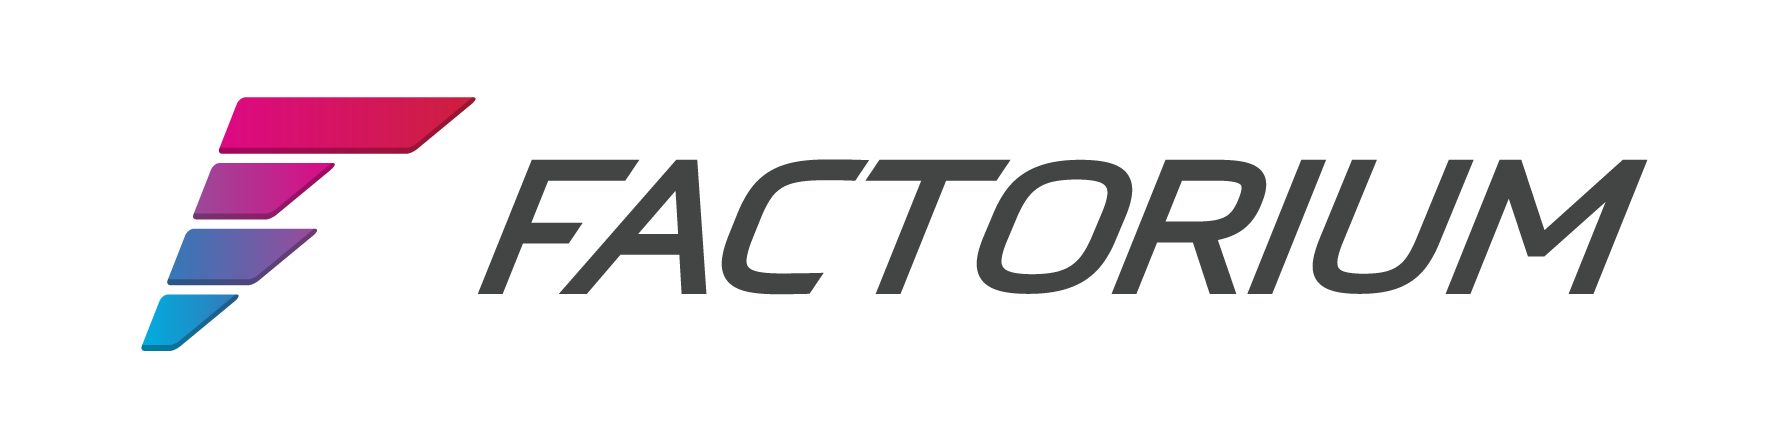 as-2021f-012-Factorium-logo.png